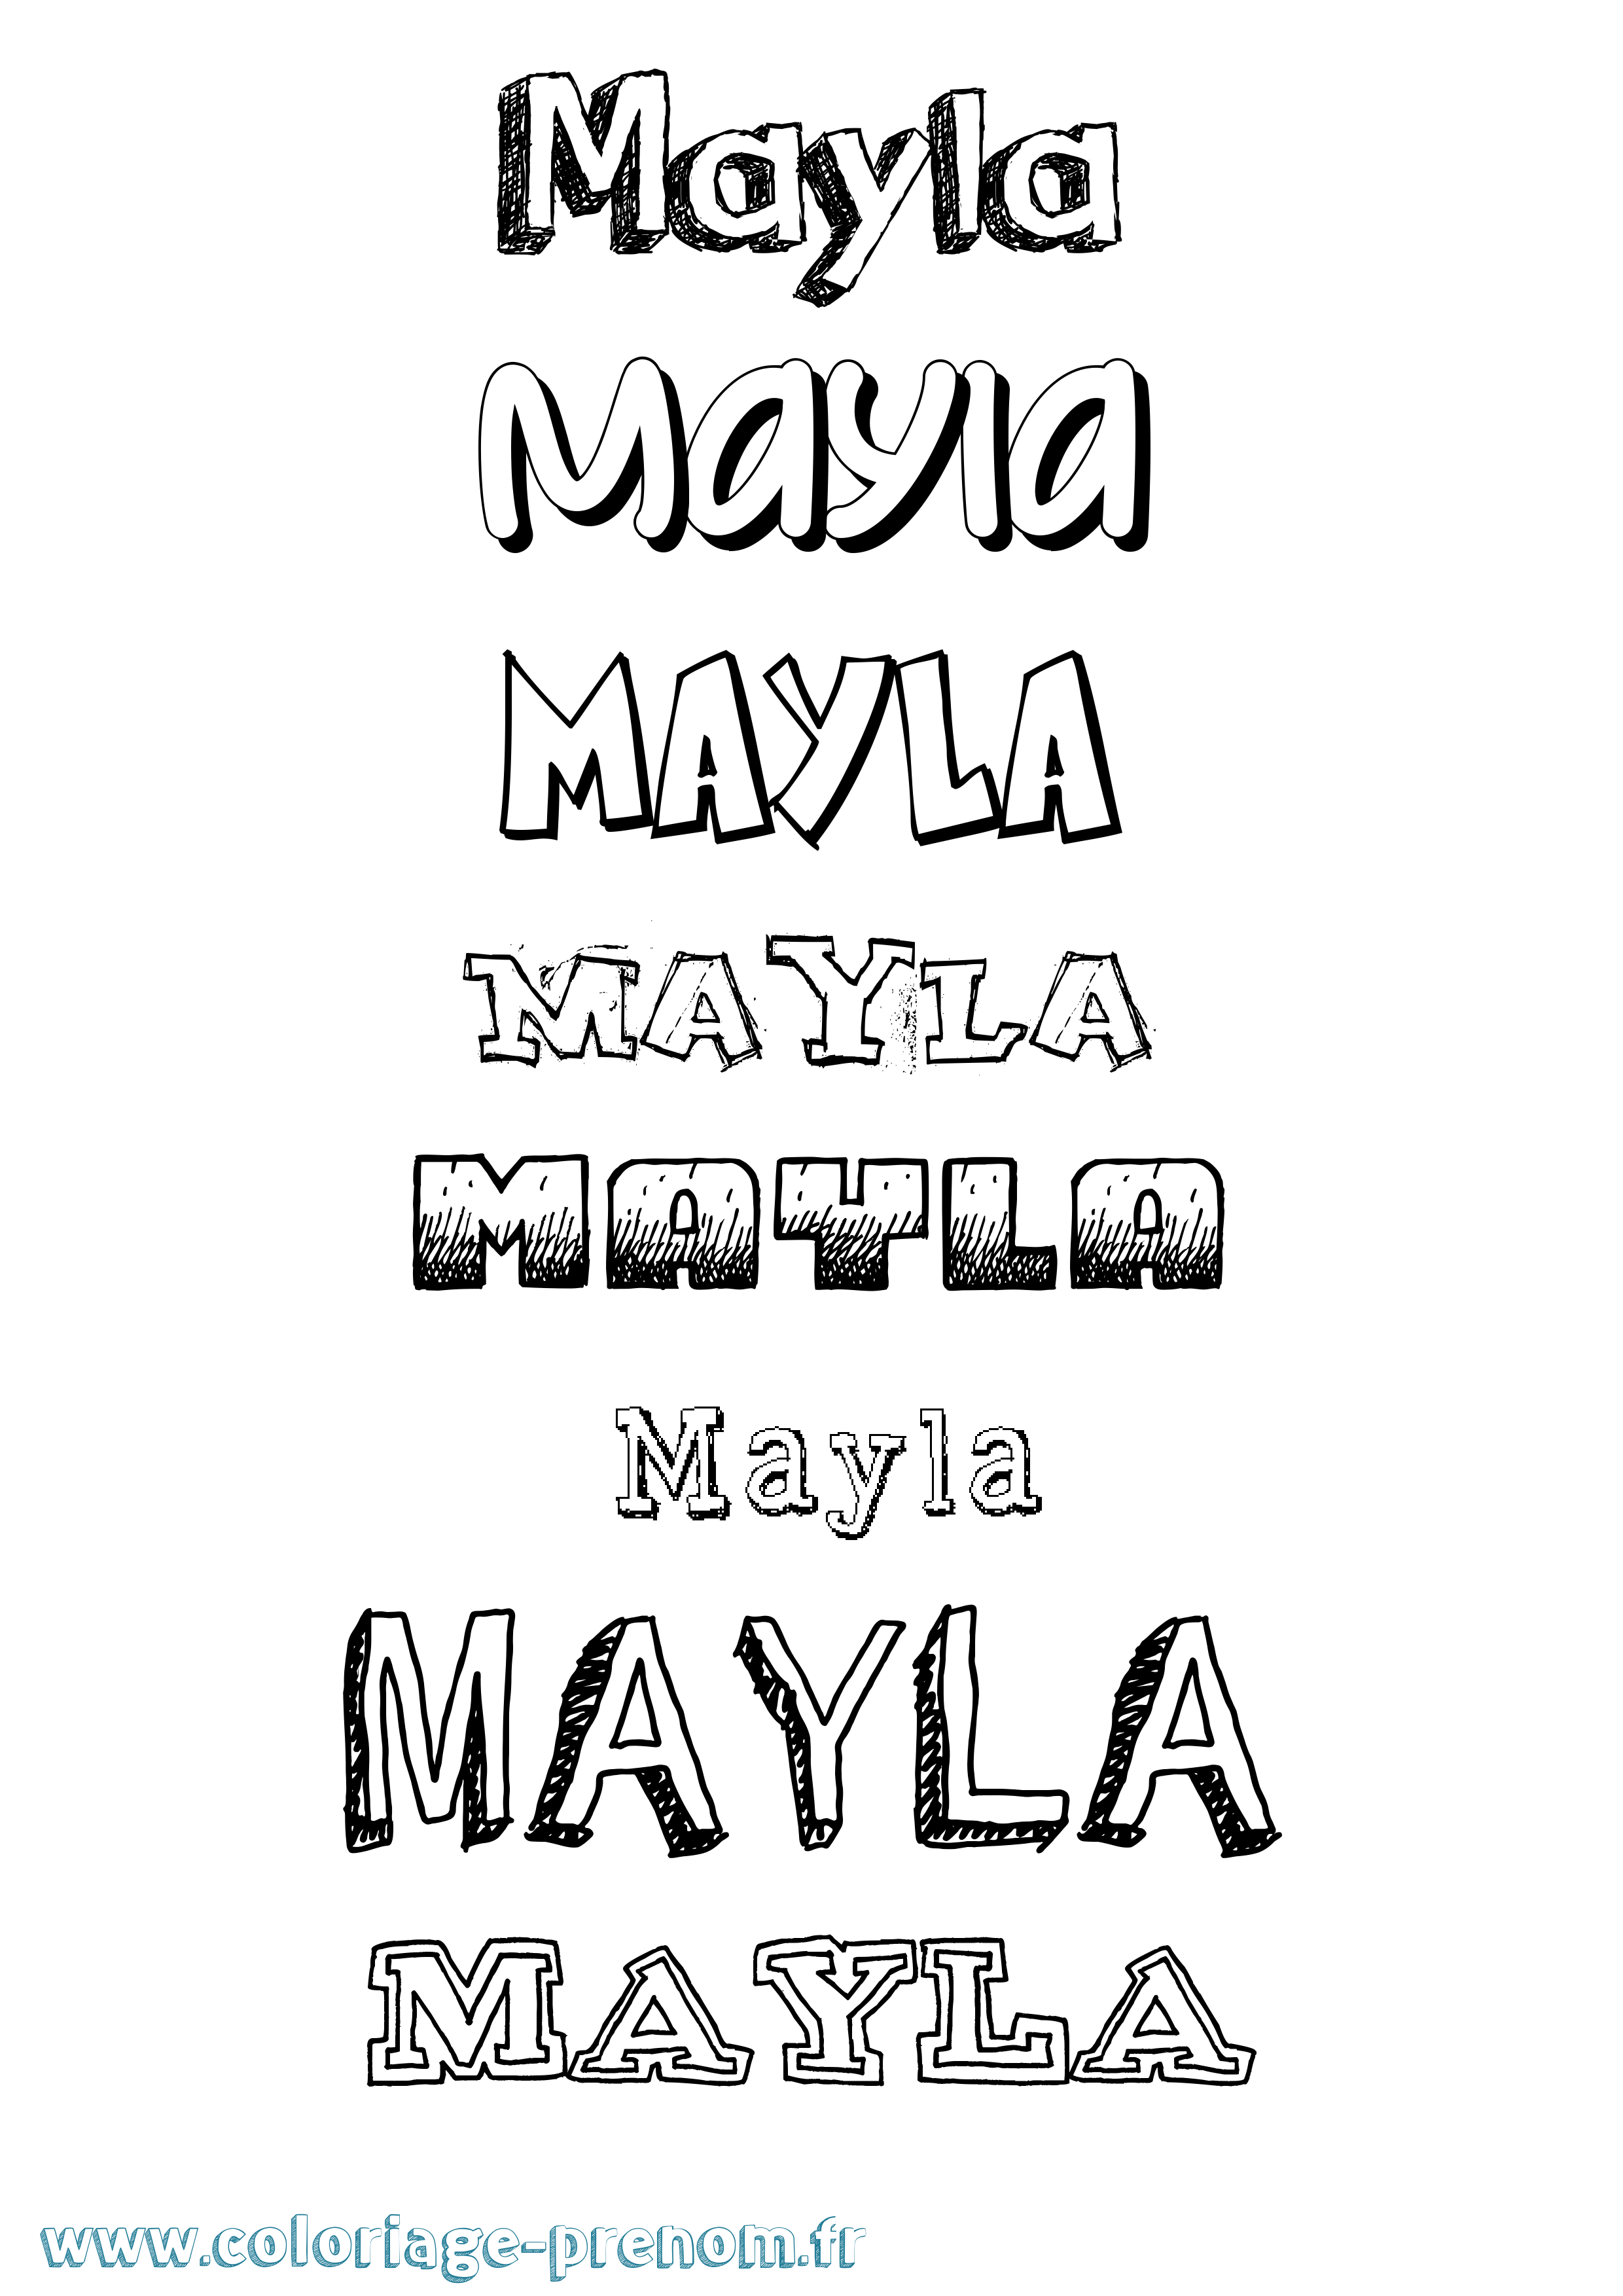 Coloriage prénom Mayla Dessiné